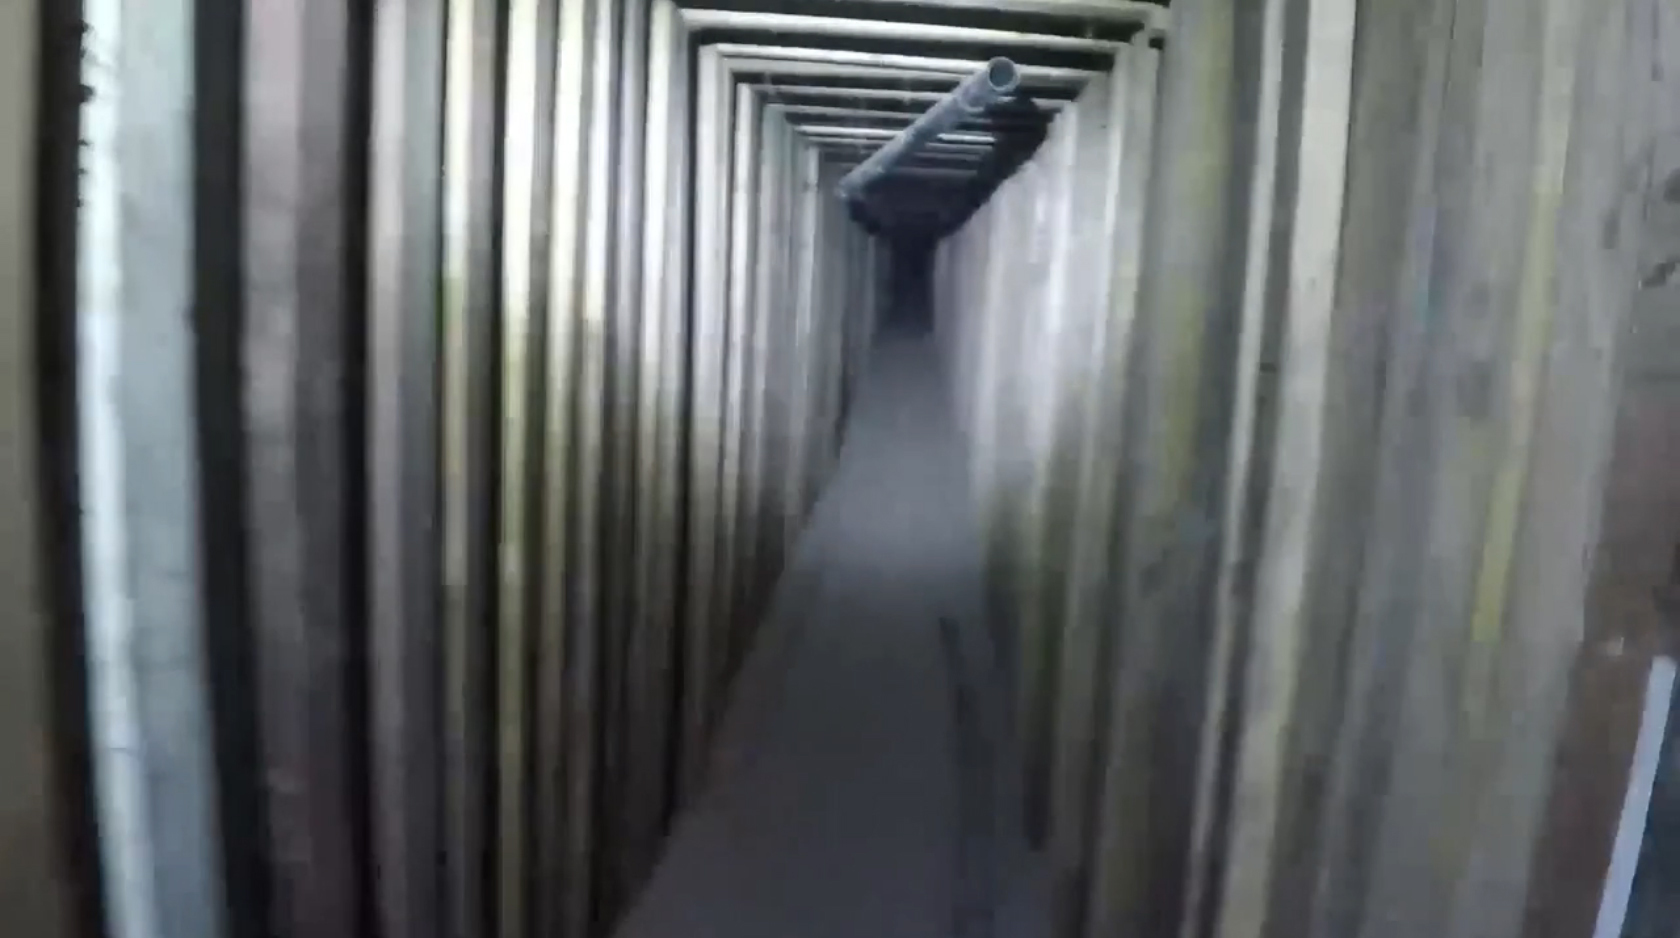 A drug smuggling tunnel